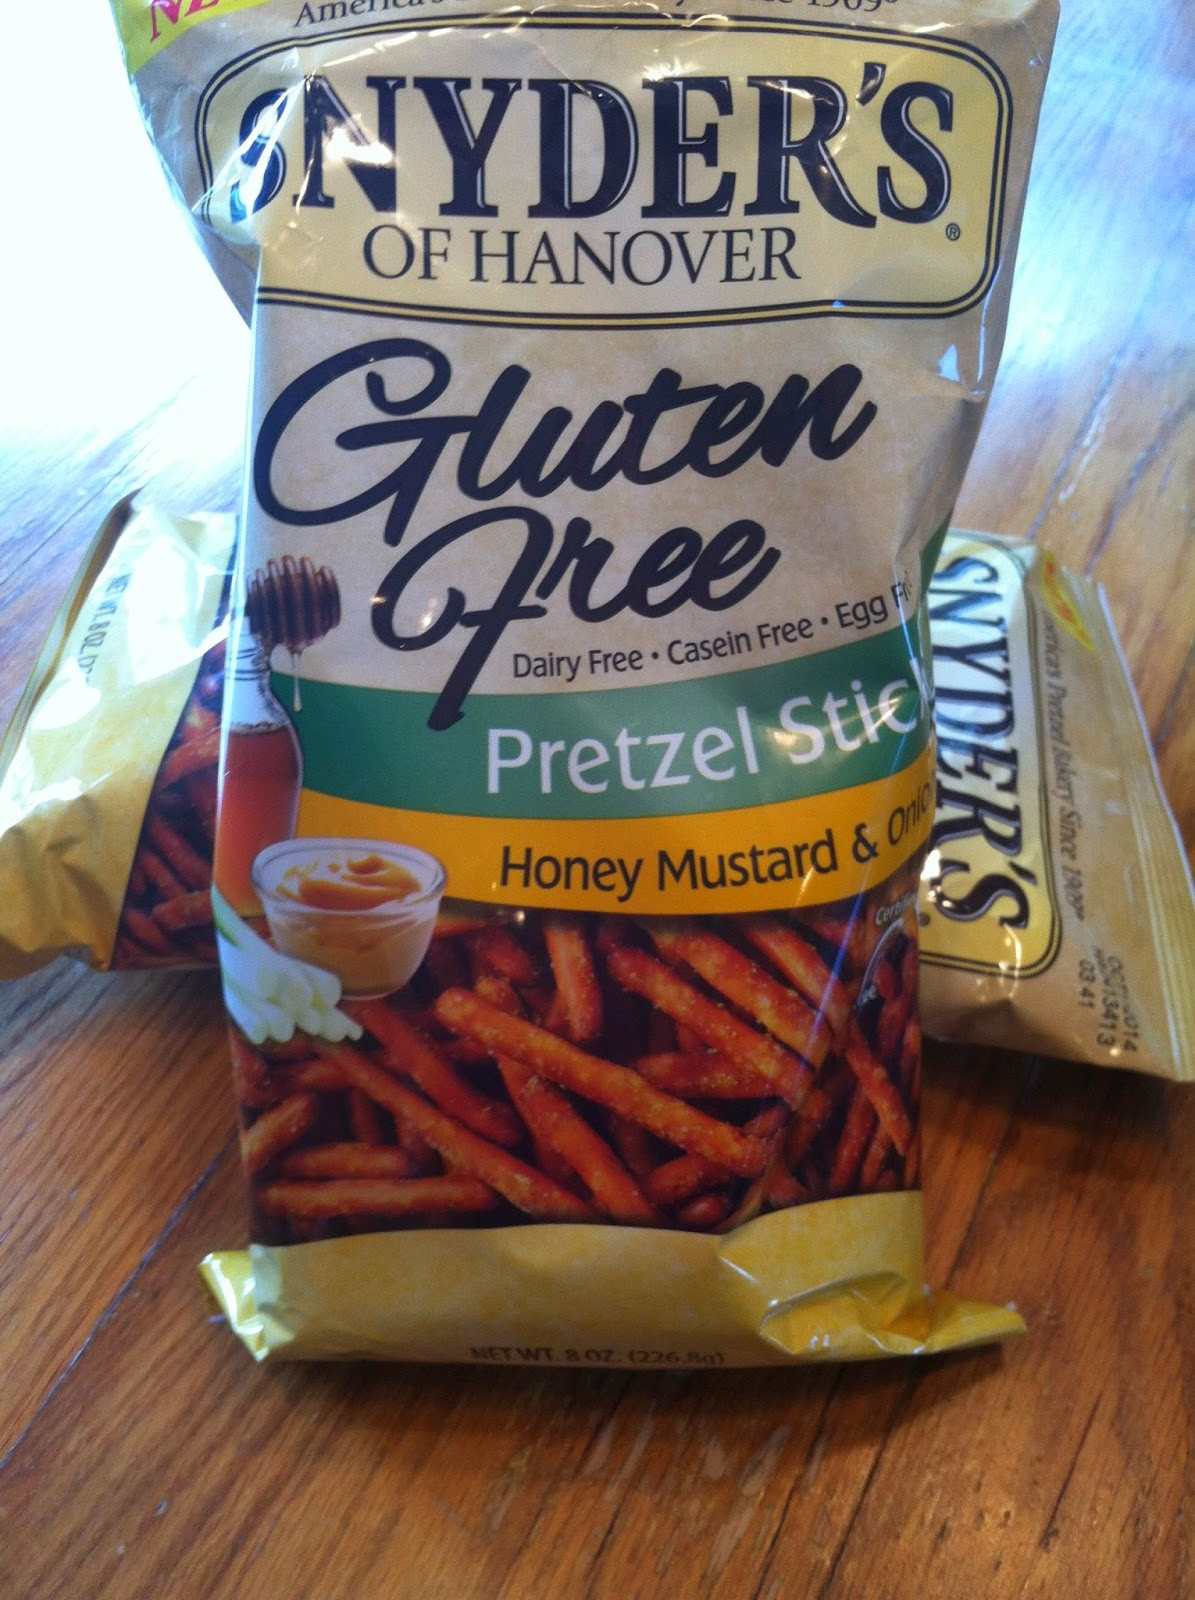 Snyders Pretzels Gluten Free
 No apologies gluten free Gluten free Pretzel Sticks by